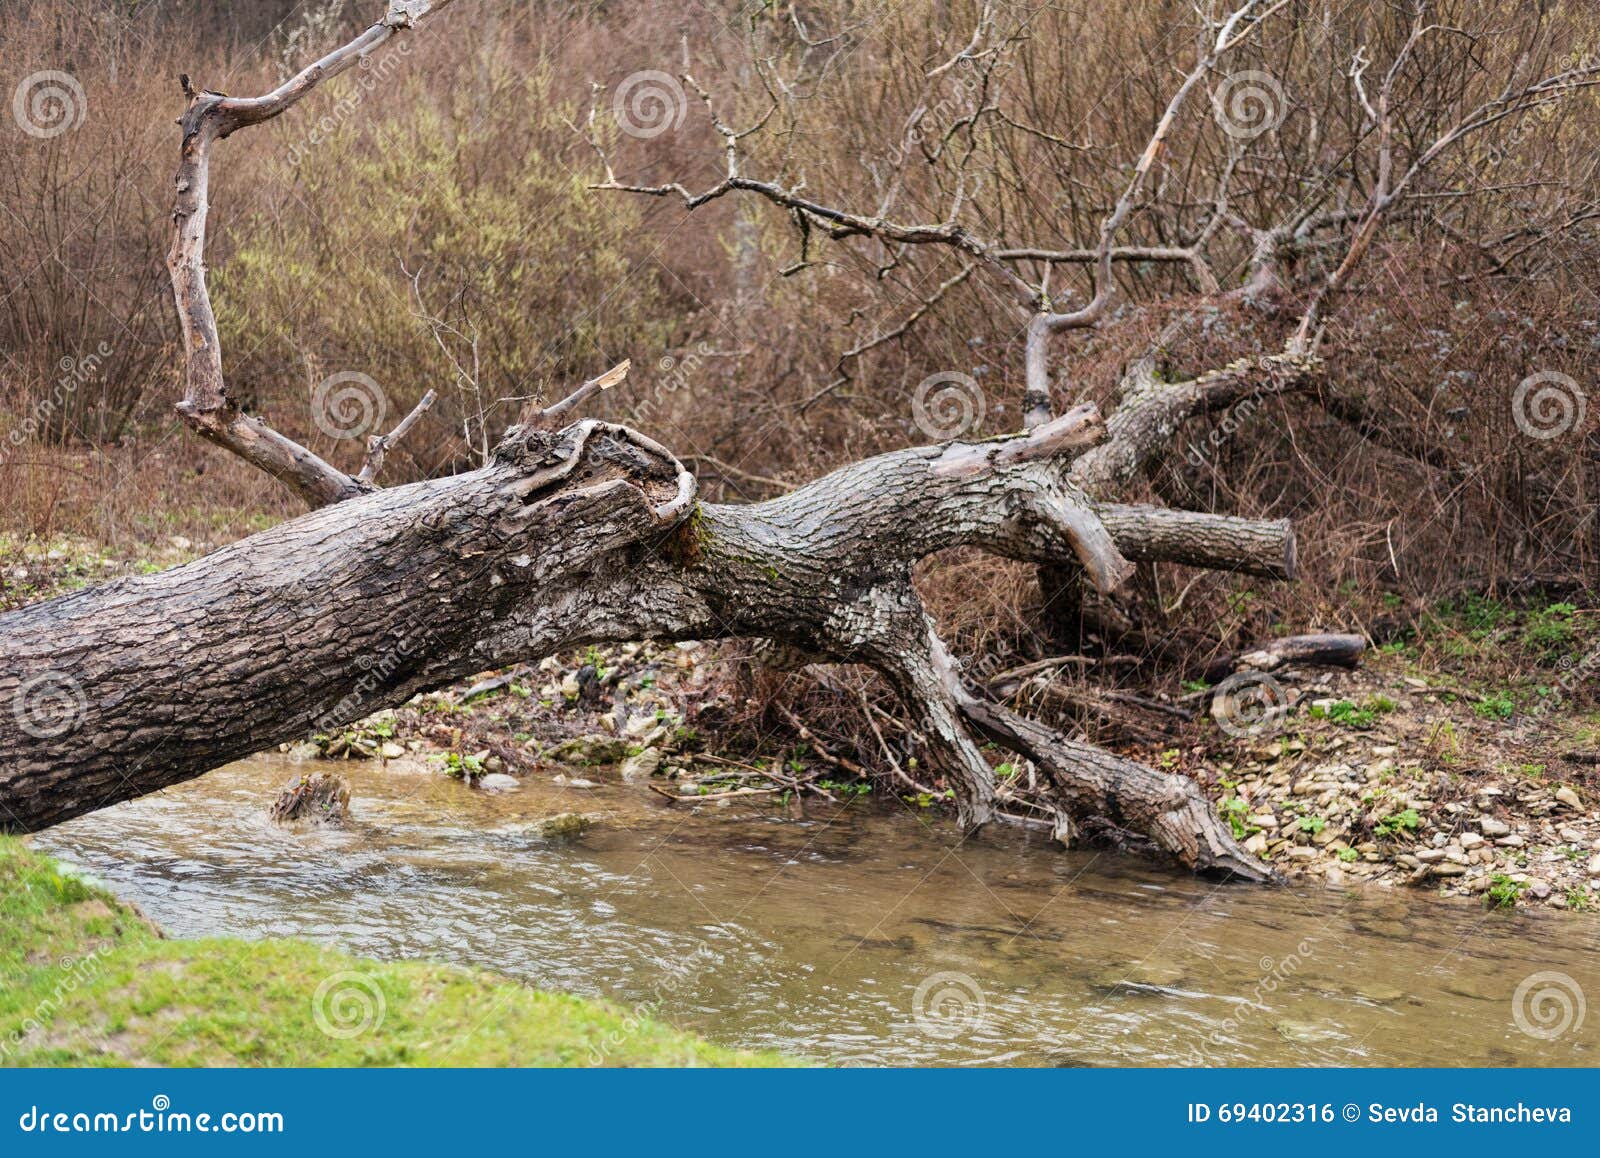 fallen tree trunk bridging a forest river waterfall